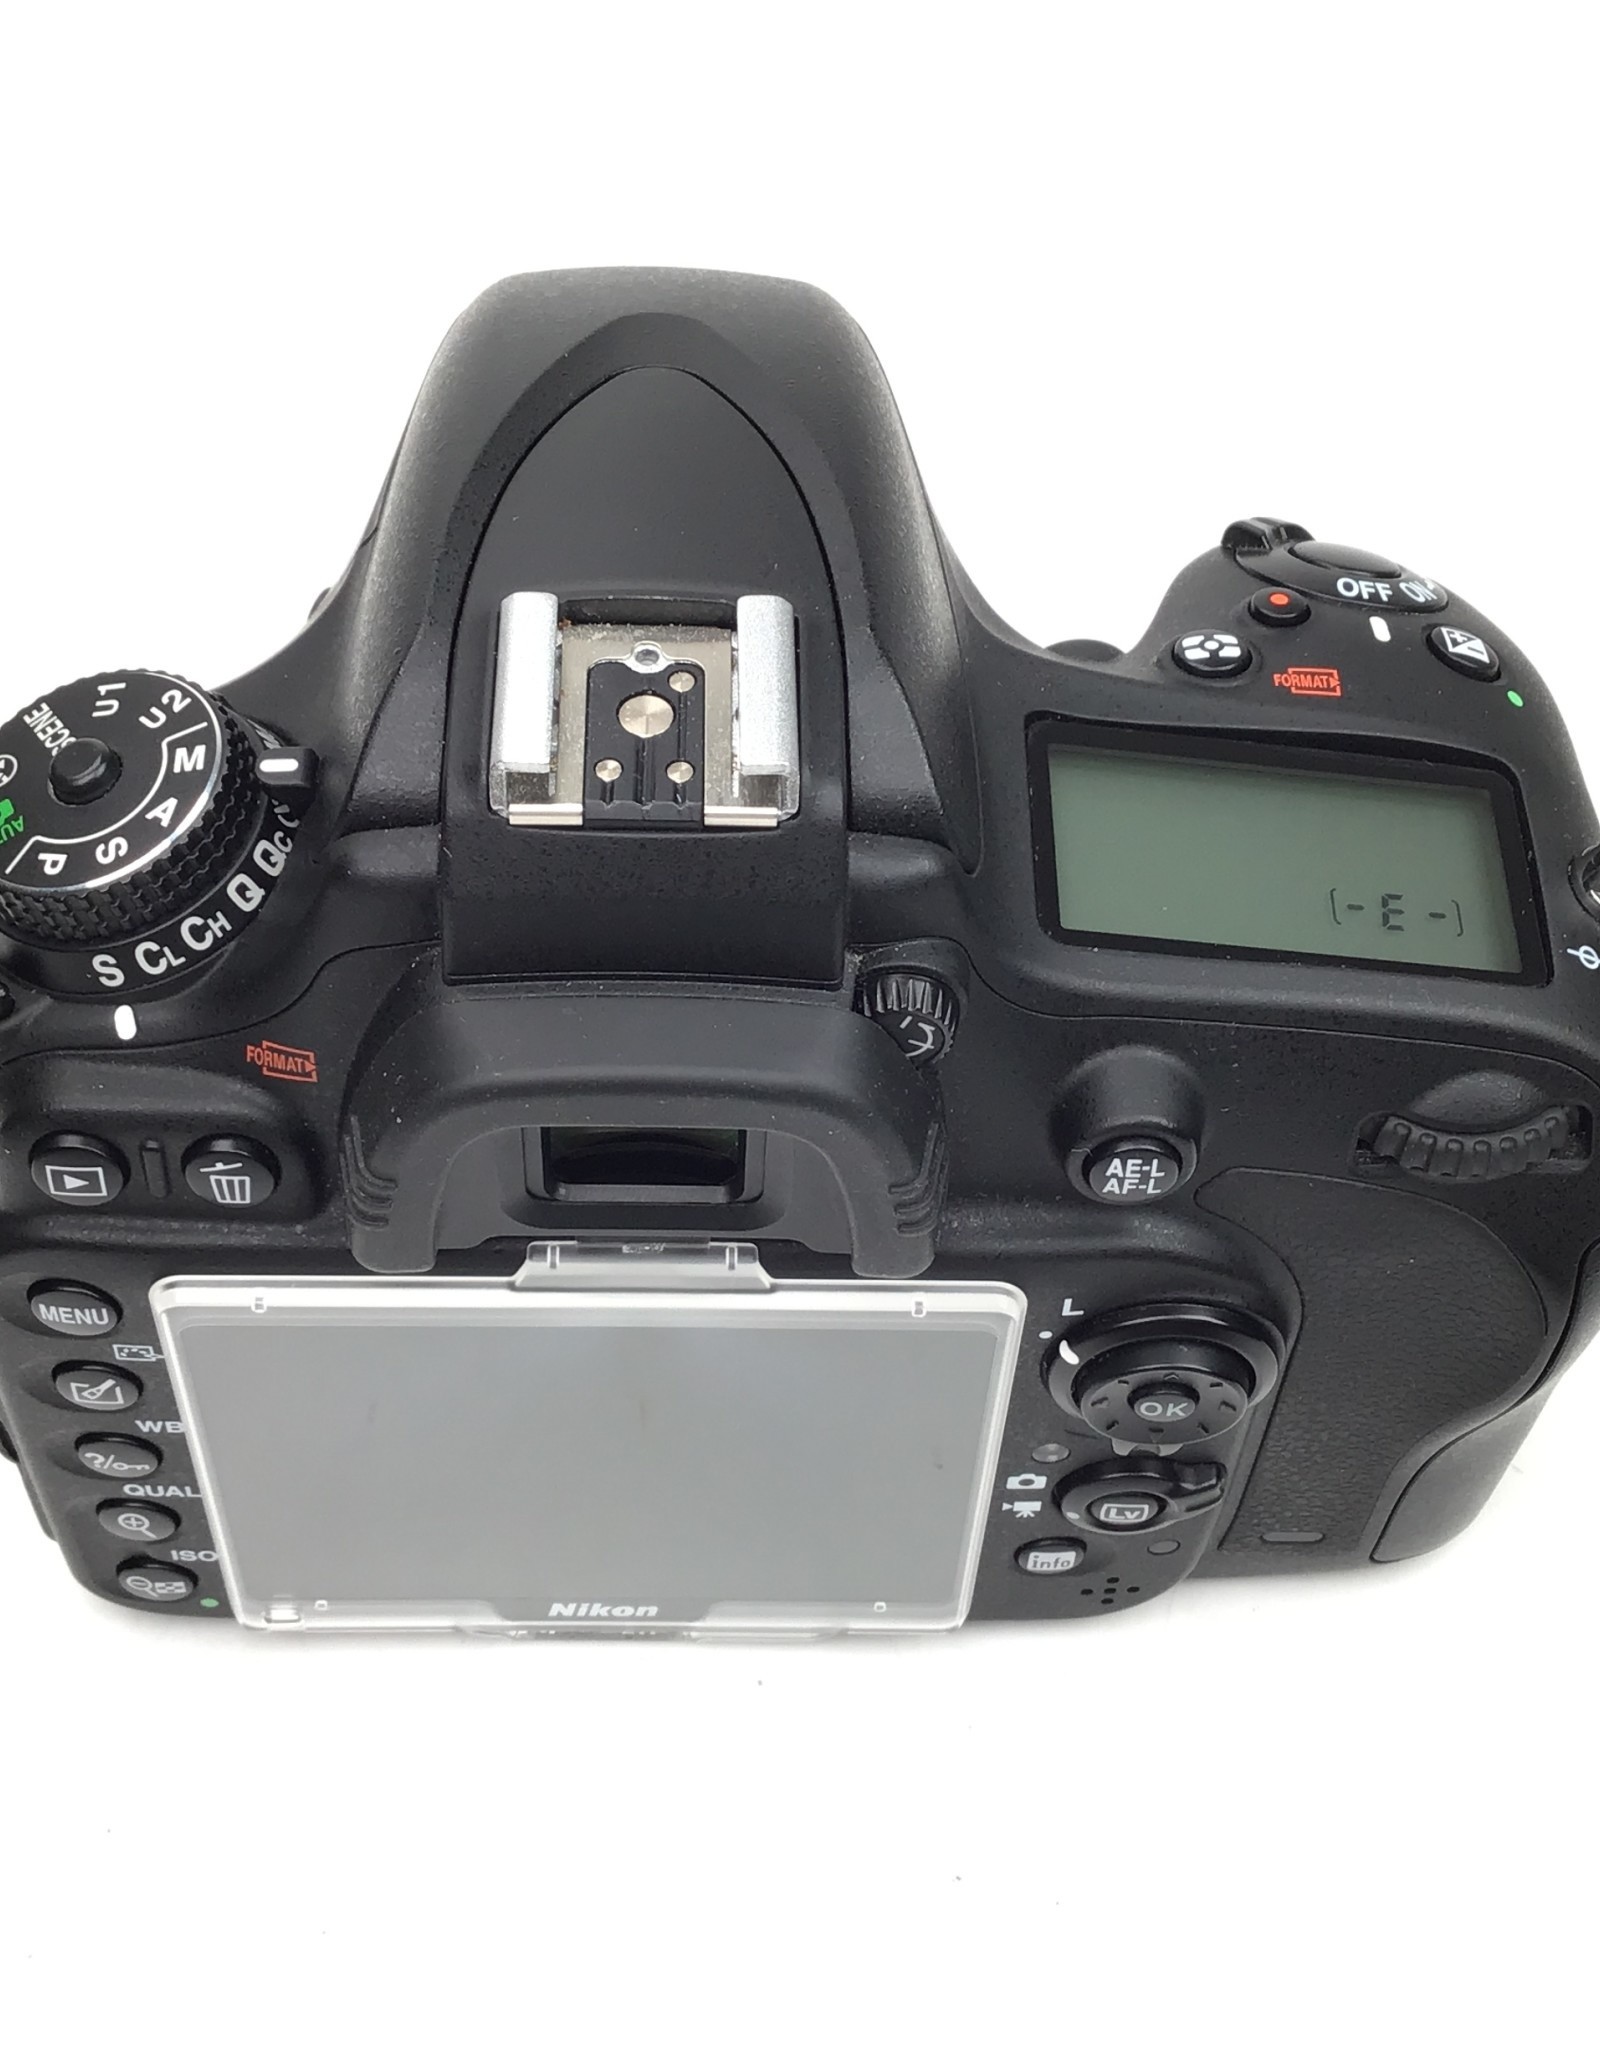 NIKON Nikon D610 Camera Body Shutter Count 17505 Used Good